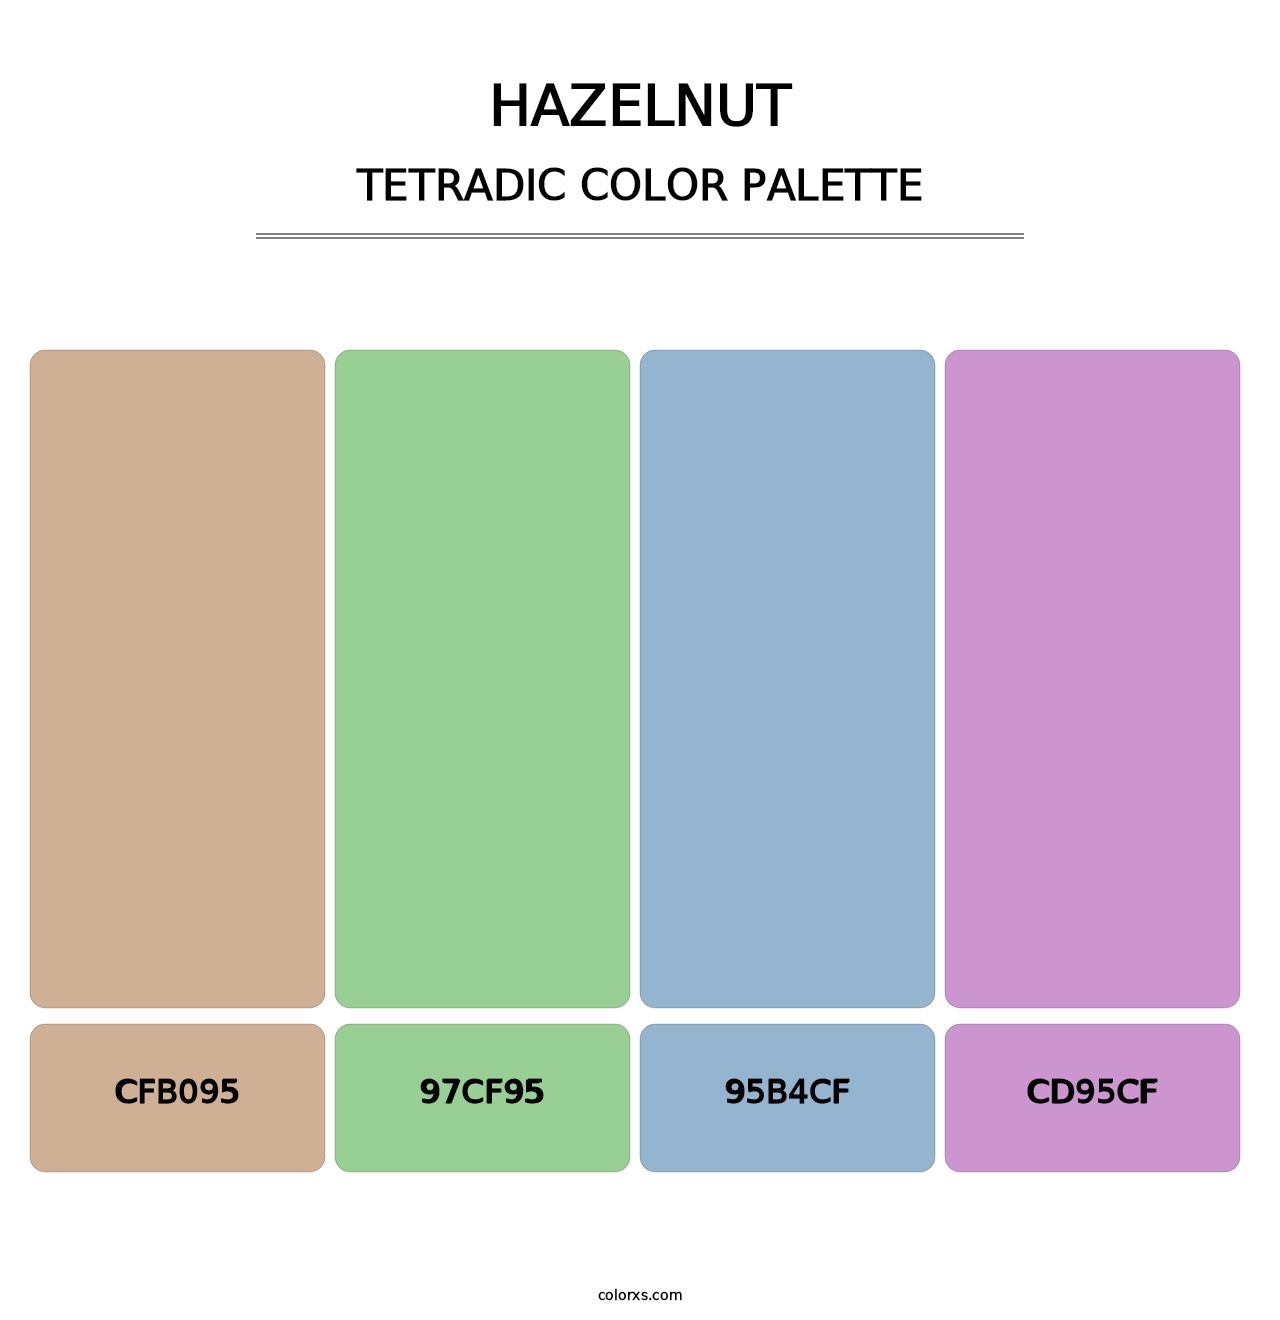 Hazelnut - Tetradic Color Palette